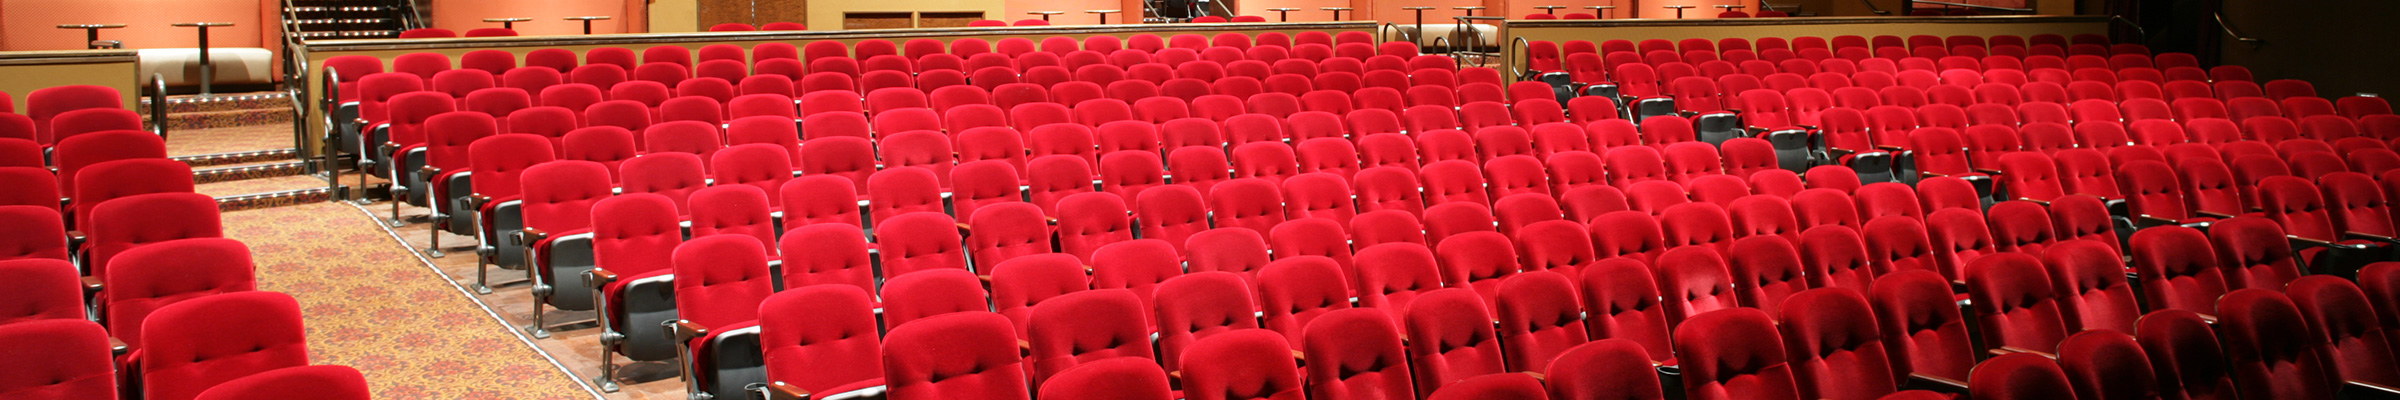 Circus Maximus theater seating